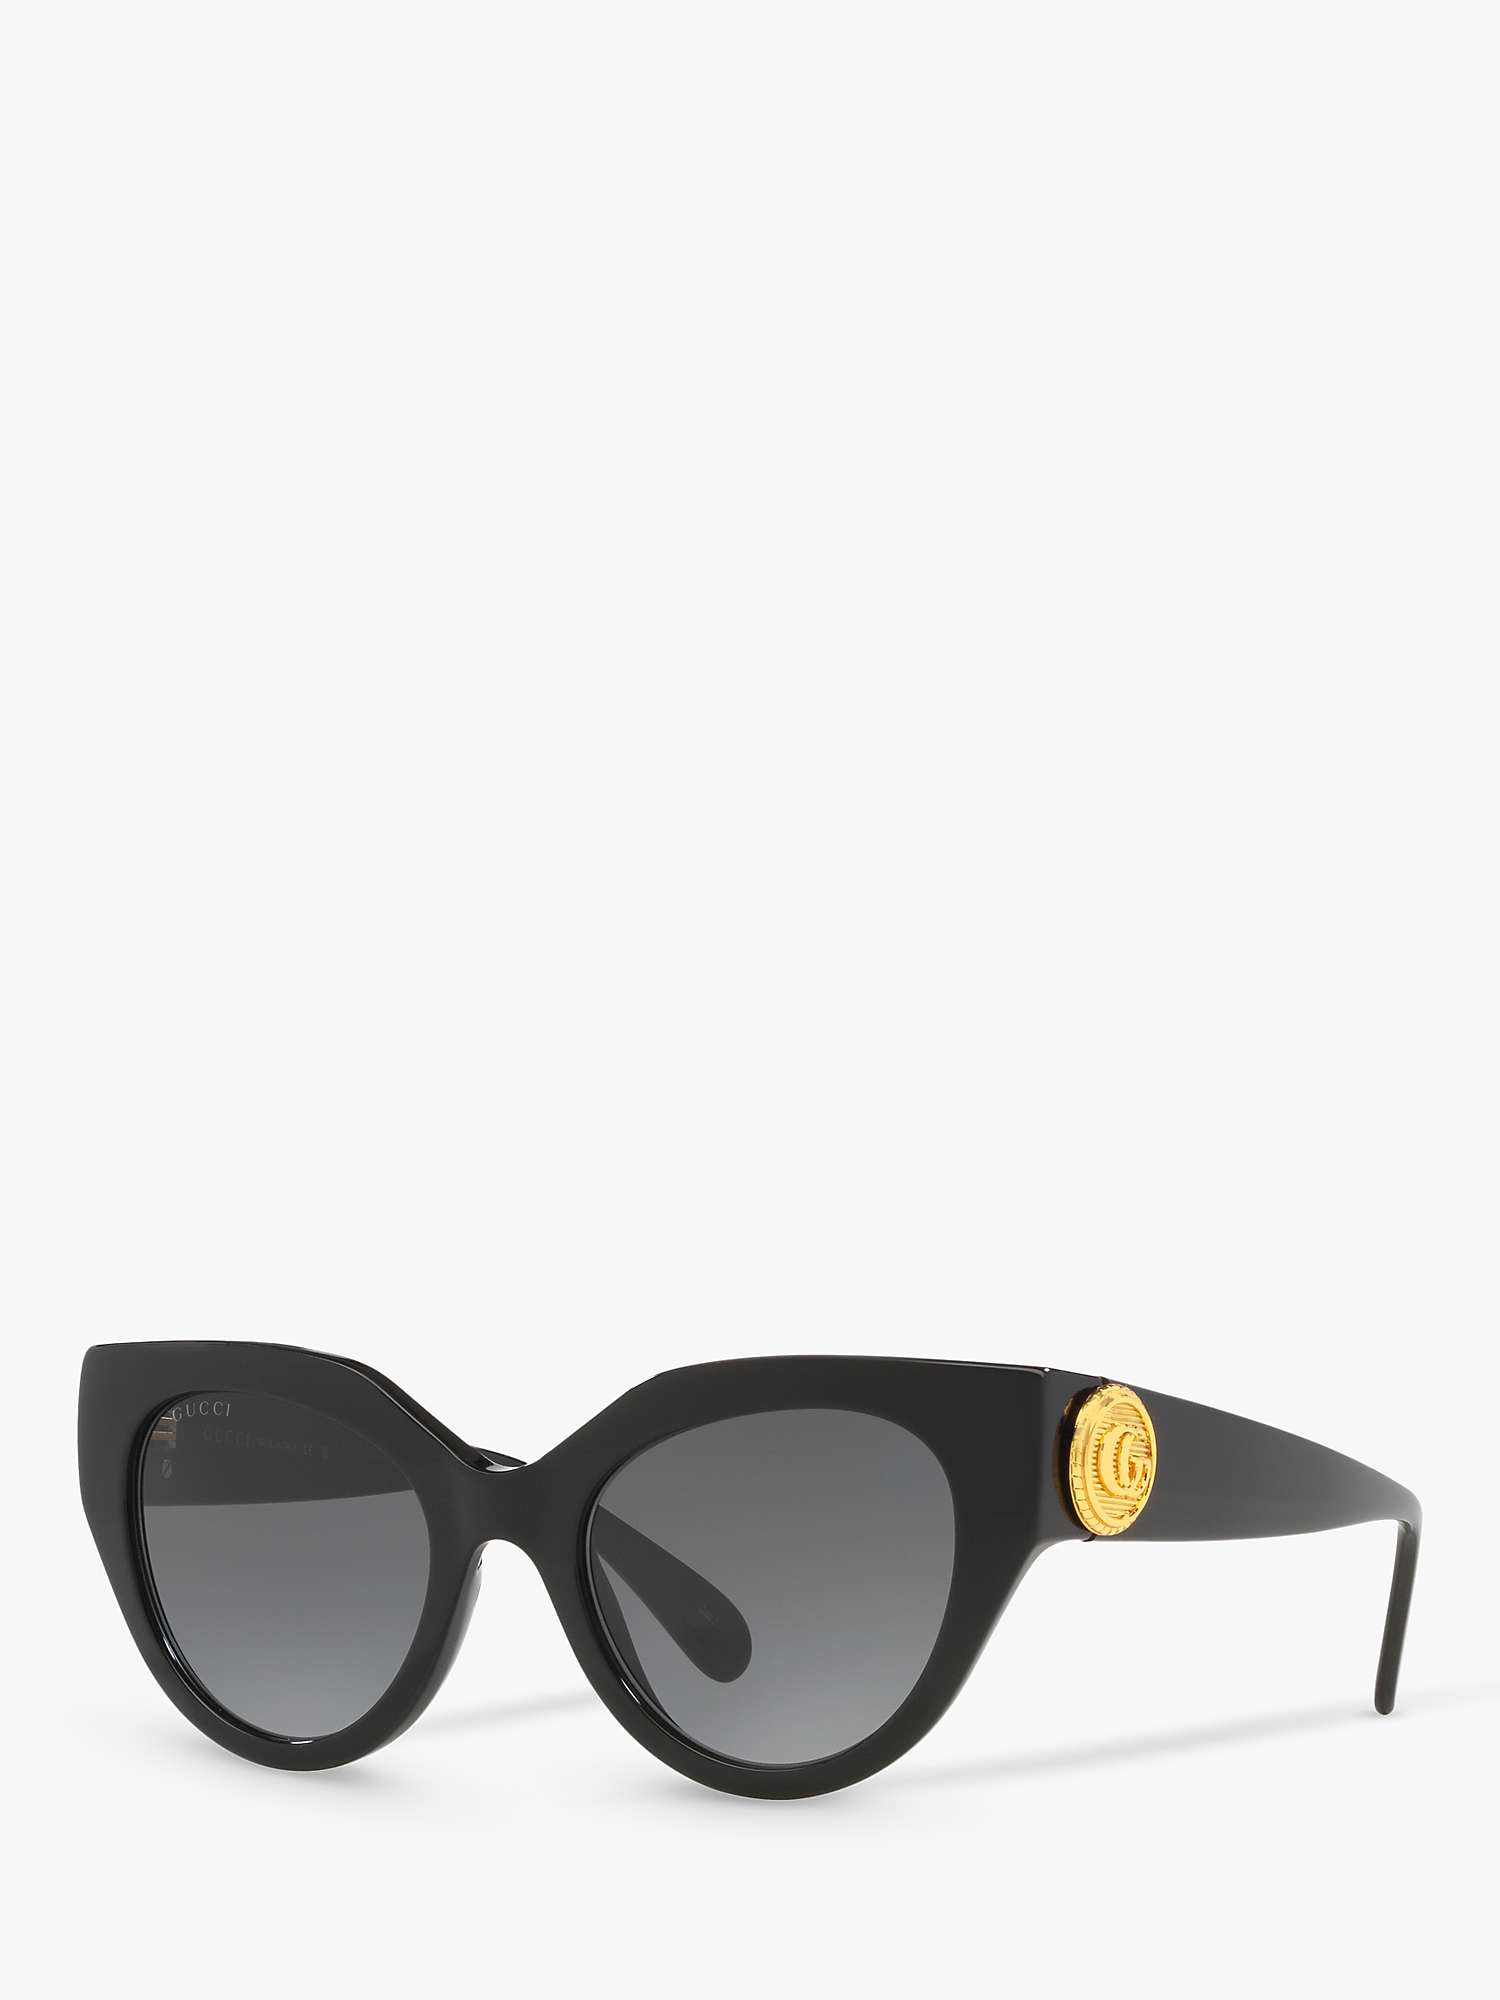 Buy Gucci GG1408S Women's Cat's Eye Sunglasses, Black/Grey Gradient Online at johnlewis.com